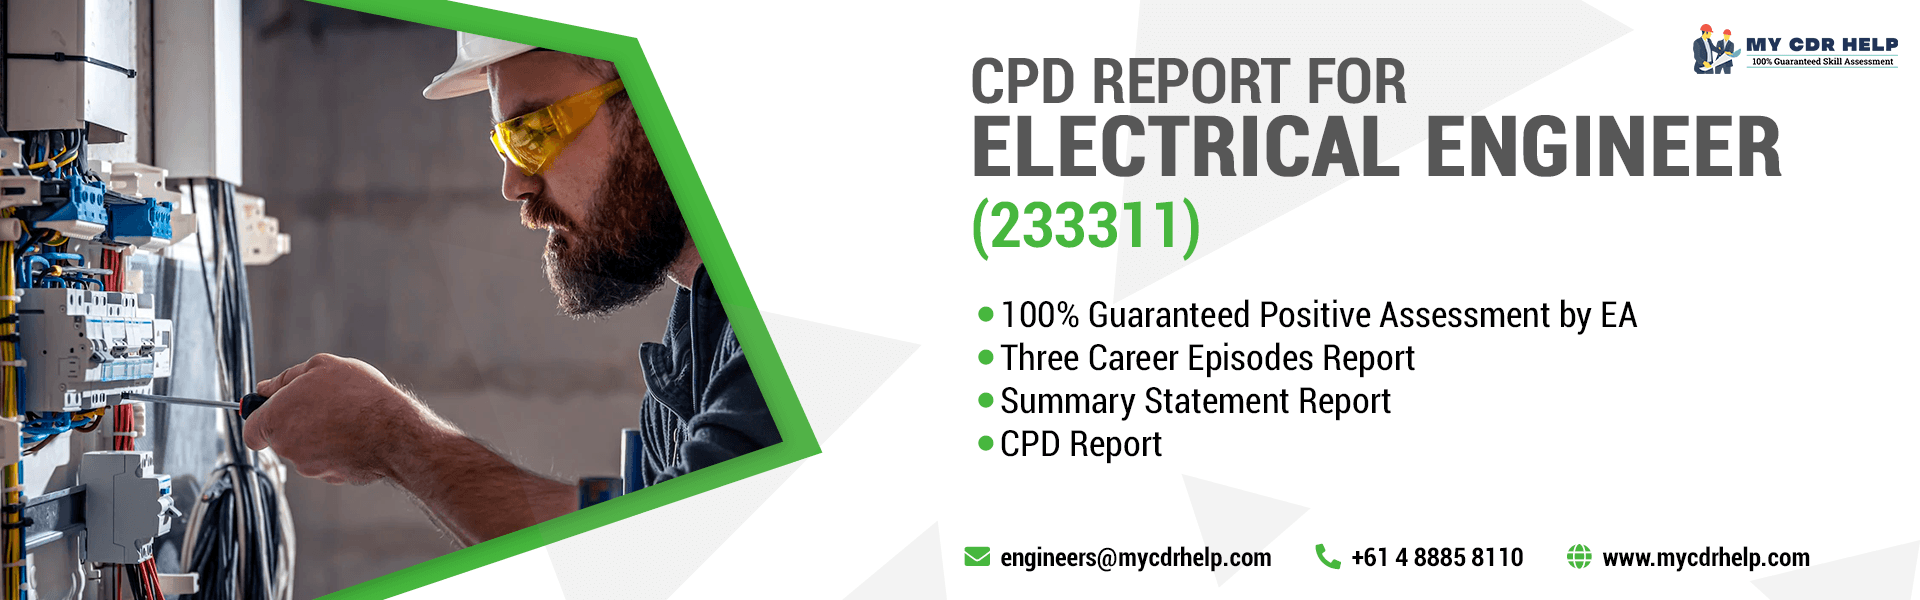 Electrical engineer CDR sample